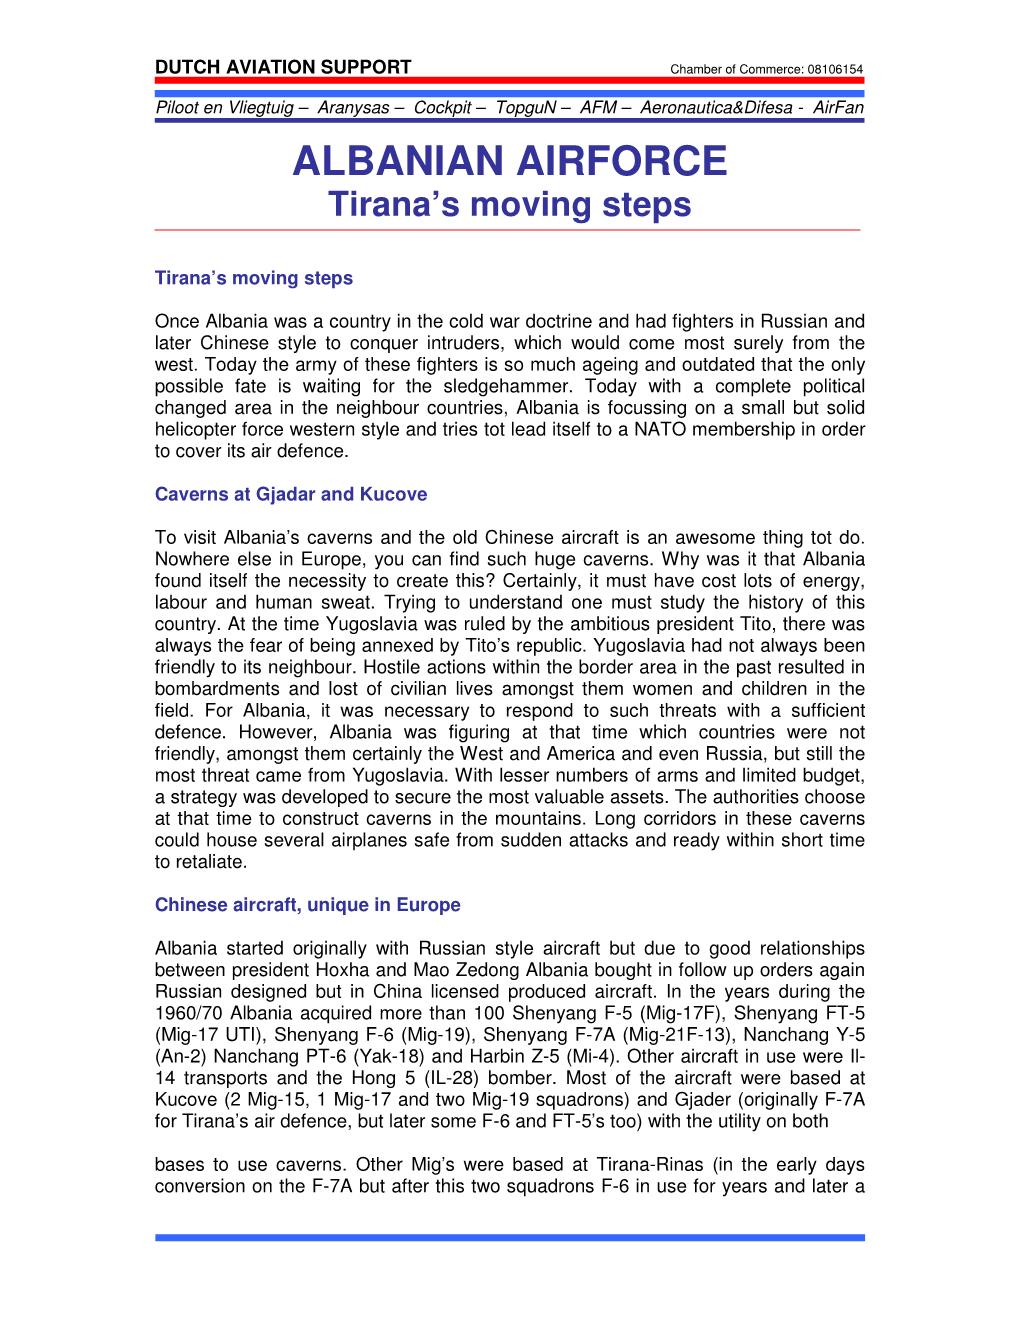 ALBANIAN AIRFORCE Tirana’S Moving Steps